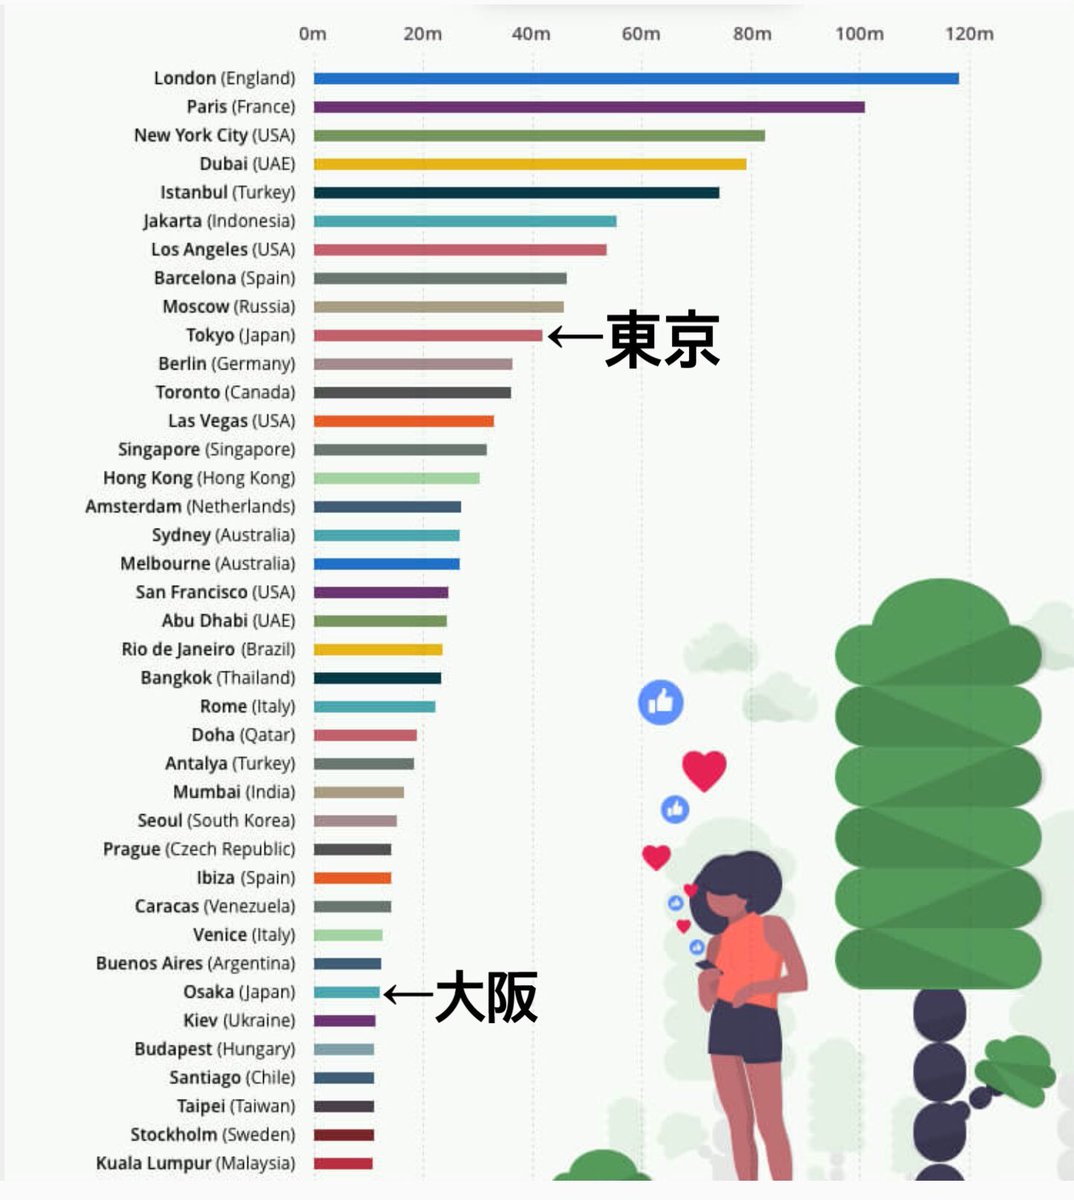 Chieko Nagayama 人気アプリinstagramは9年目 Instagrammable インスタ映え で 旅行の目的地 ホテル レストランを決める人が増えているそうです インスタグラムの19ハッシュタグを調べ 写真が撮られた多い世界50都市を認定 カテゴリー別では 東京がお